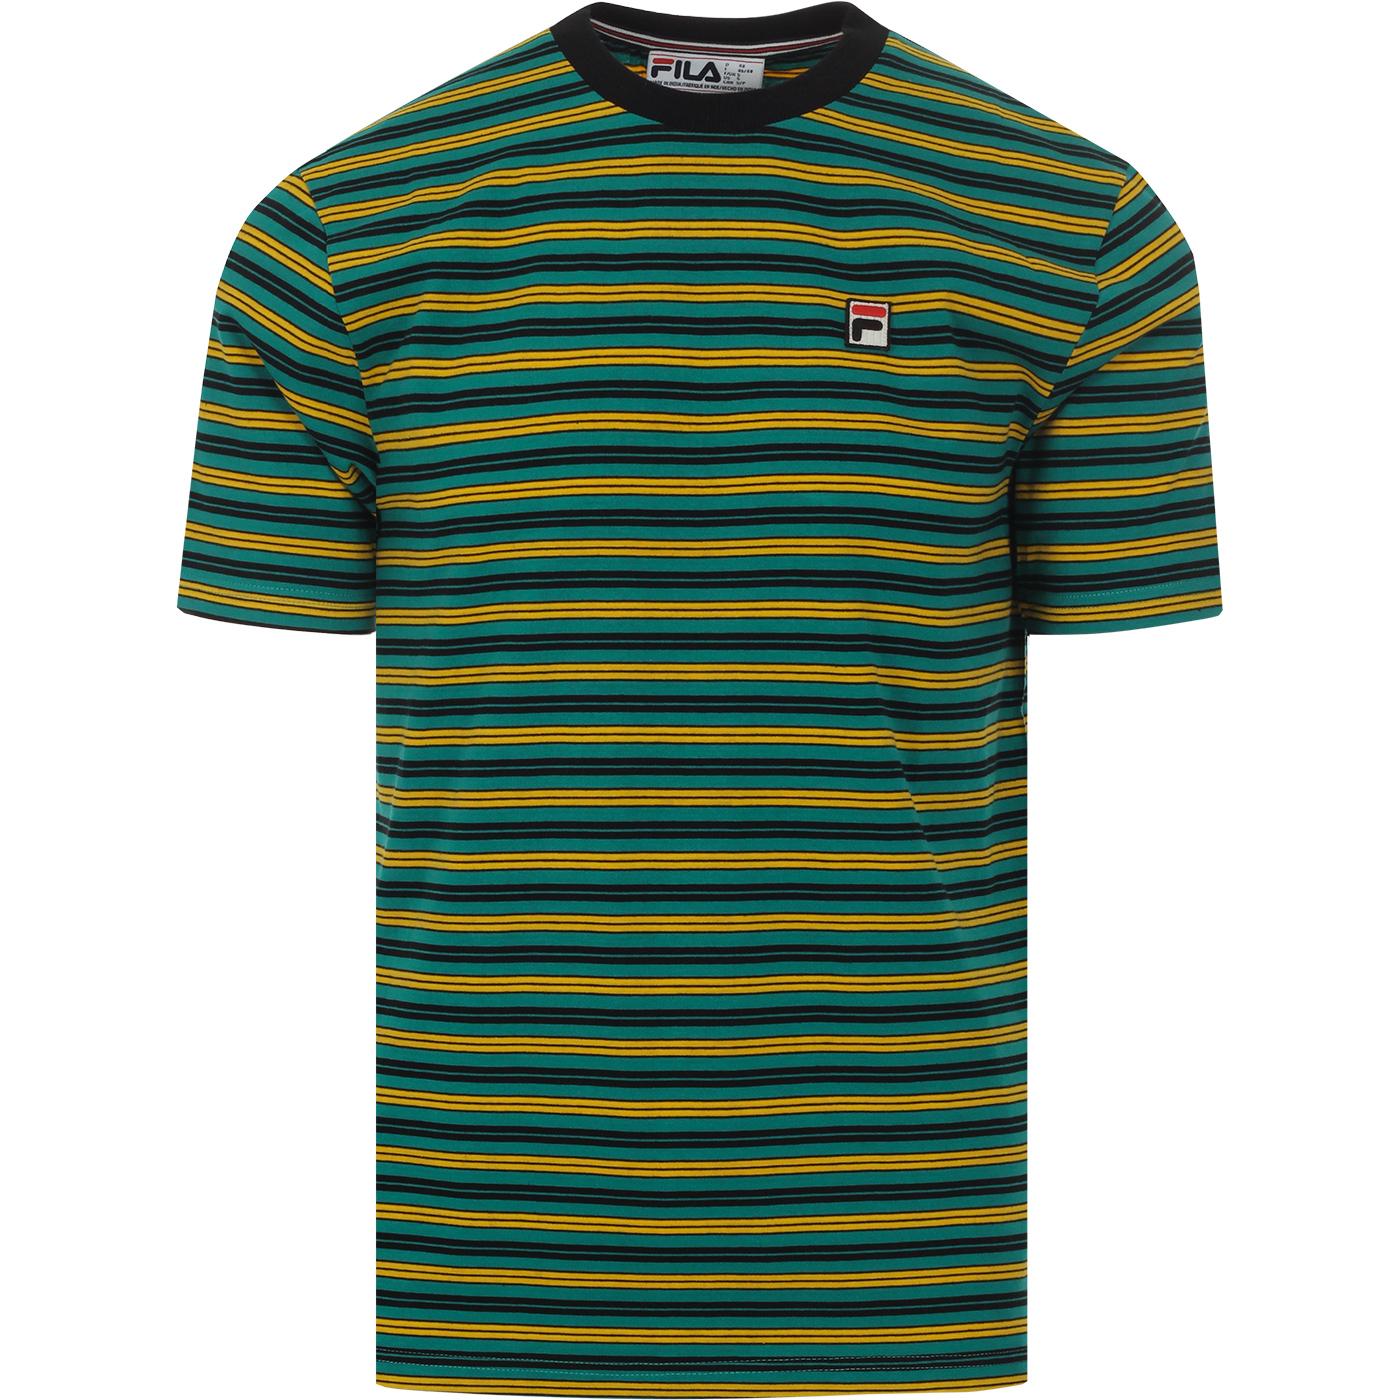 FILA VINTAGE Hugh 70s Retro Multi Stripe T-shirt Parasailing